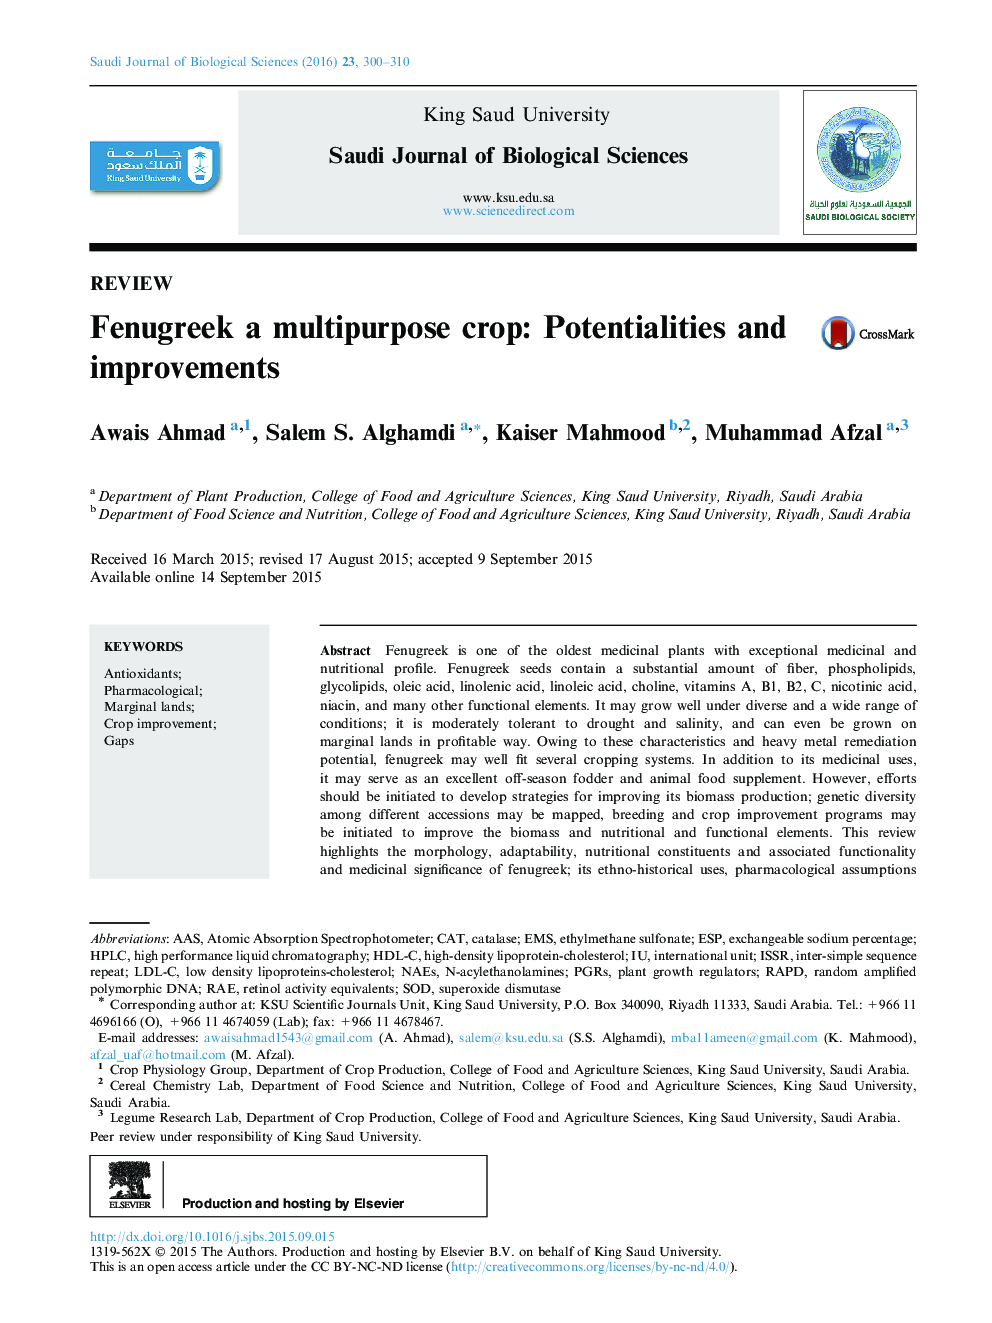 Fenugreek a multipurpose crop: Potentialities and improvements 